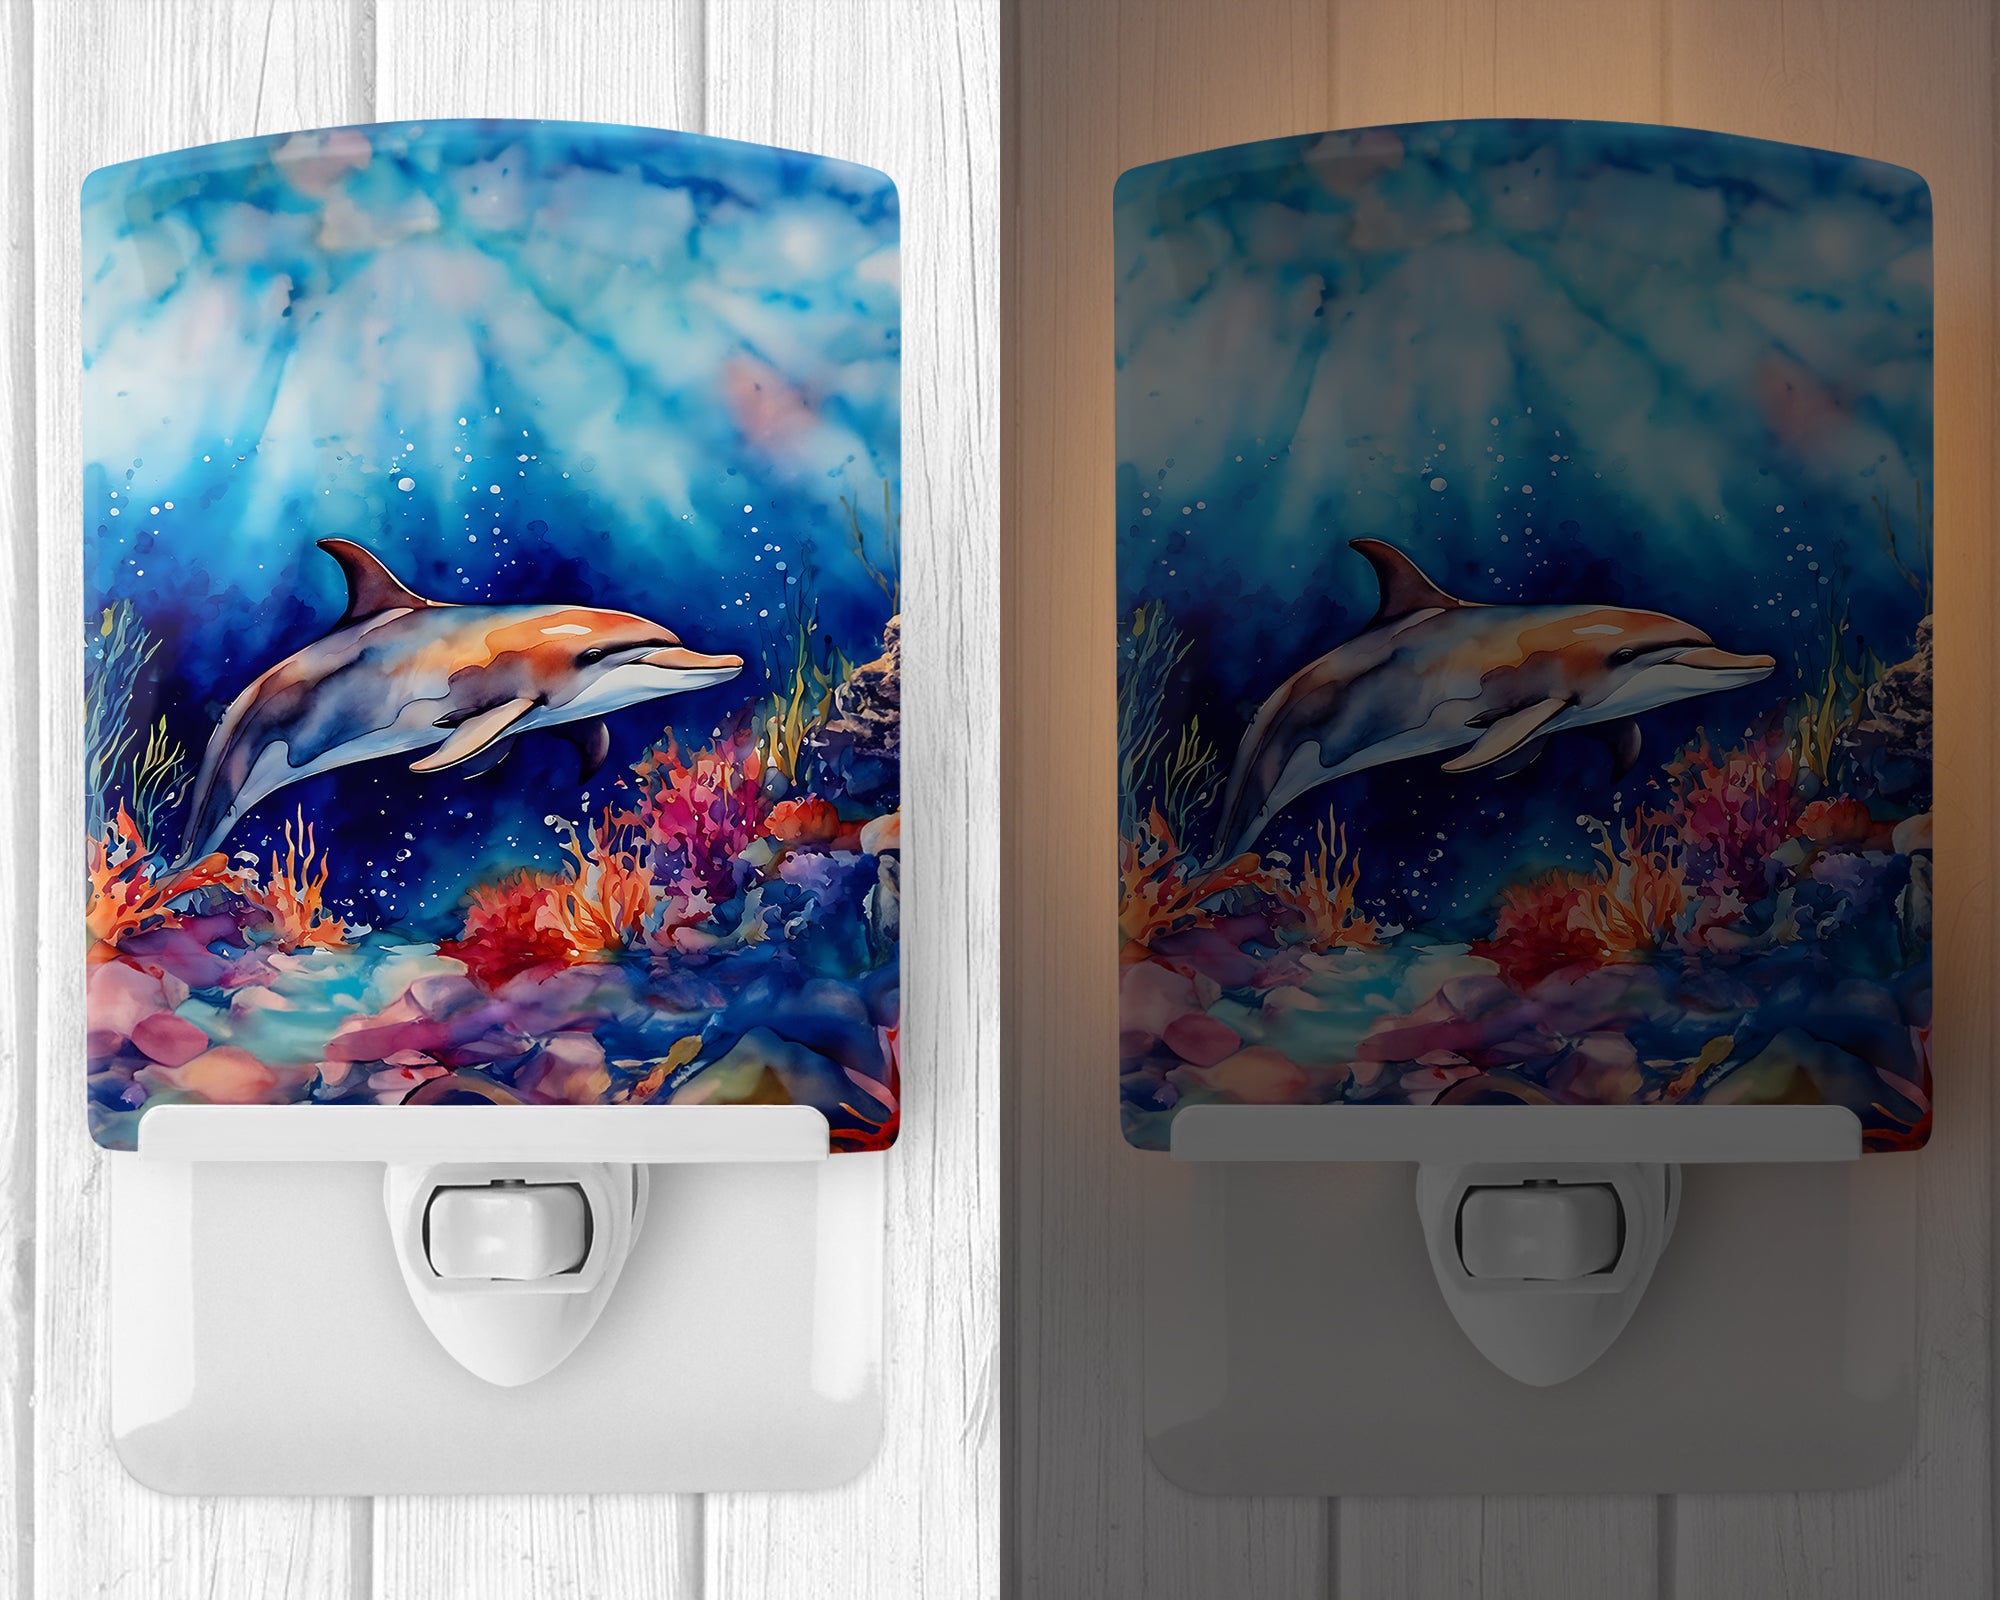 Buy this Dolphin Ceramic Night Light